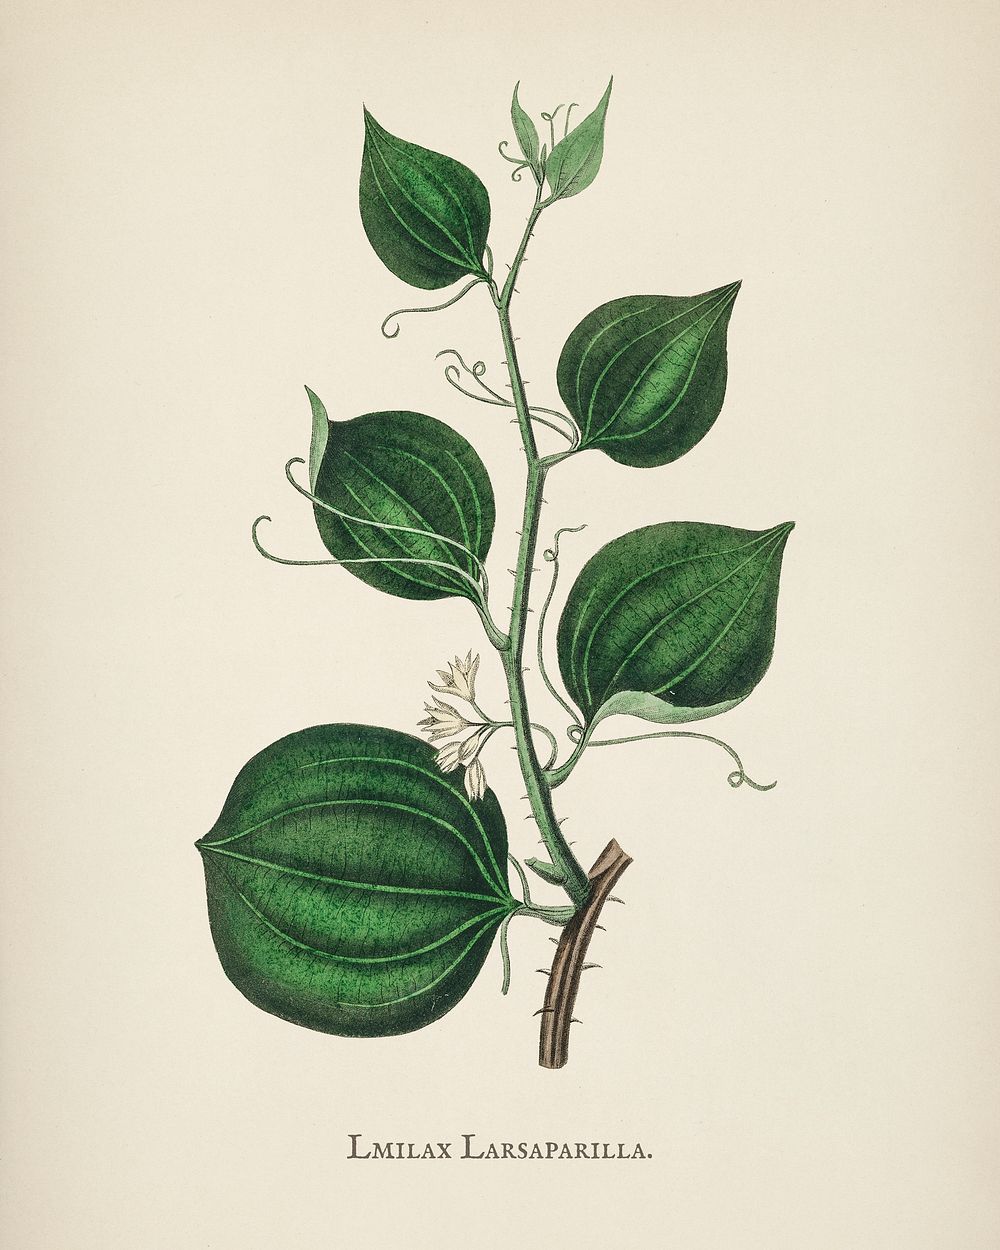 Lmilax larsaparilla illustration from Medical Botany (1836) by John Stephenson and James Morss Churchill.